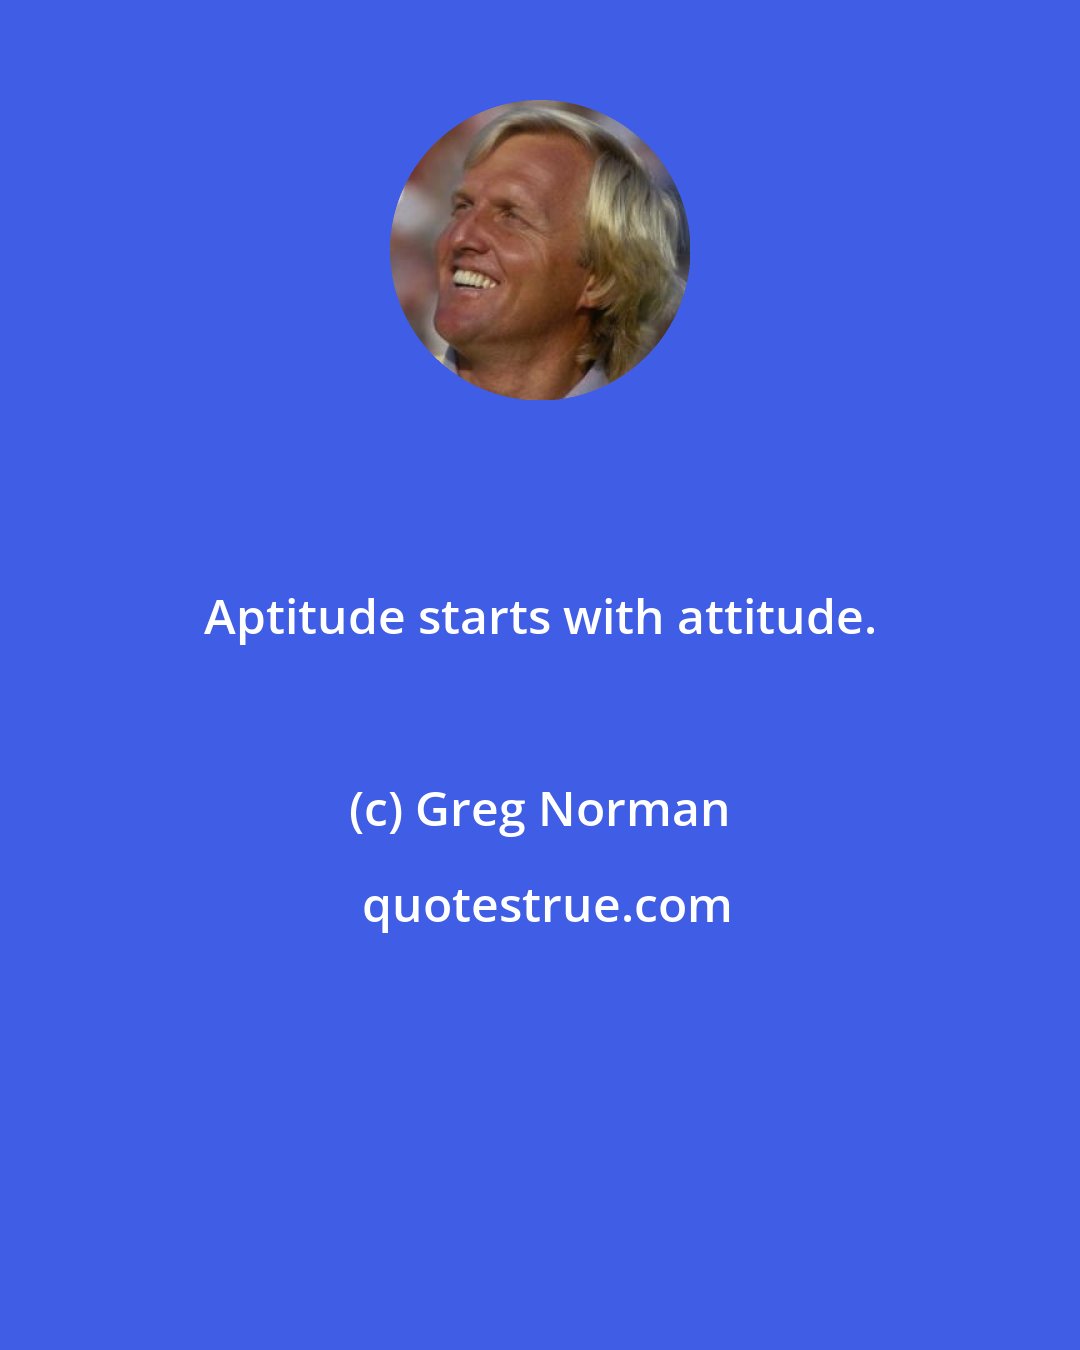 Greg Norman: Aptitude starts with attitude.